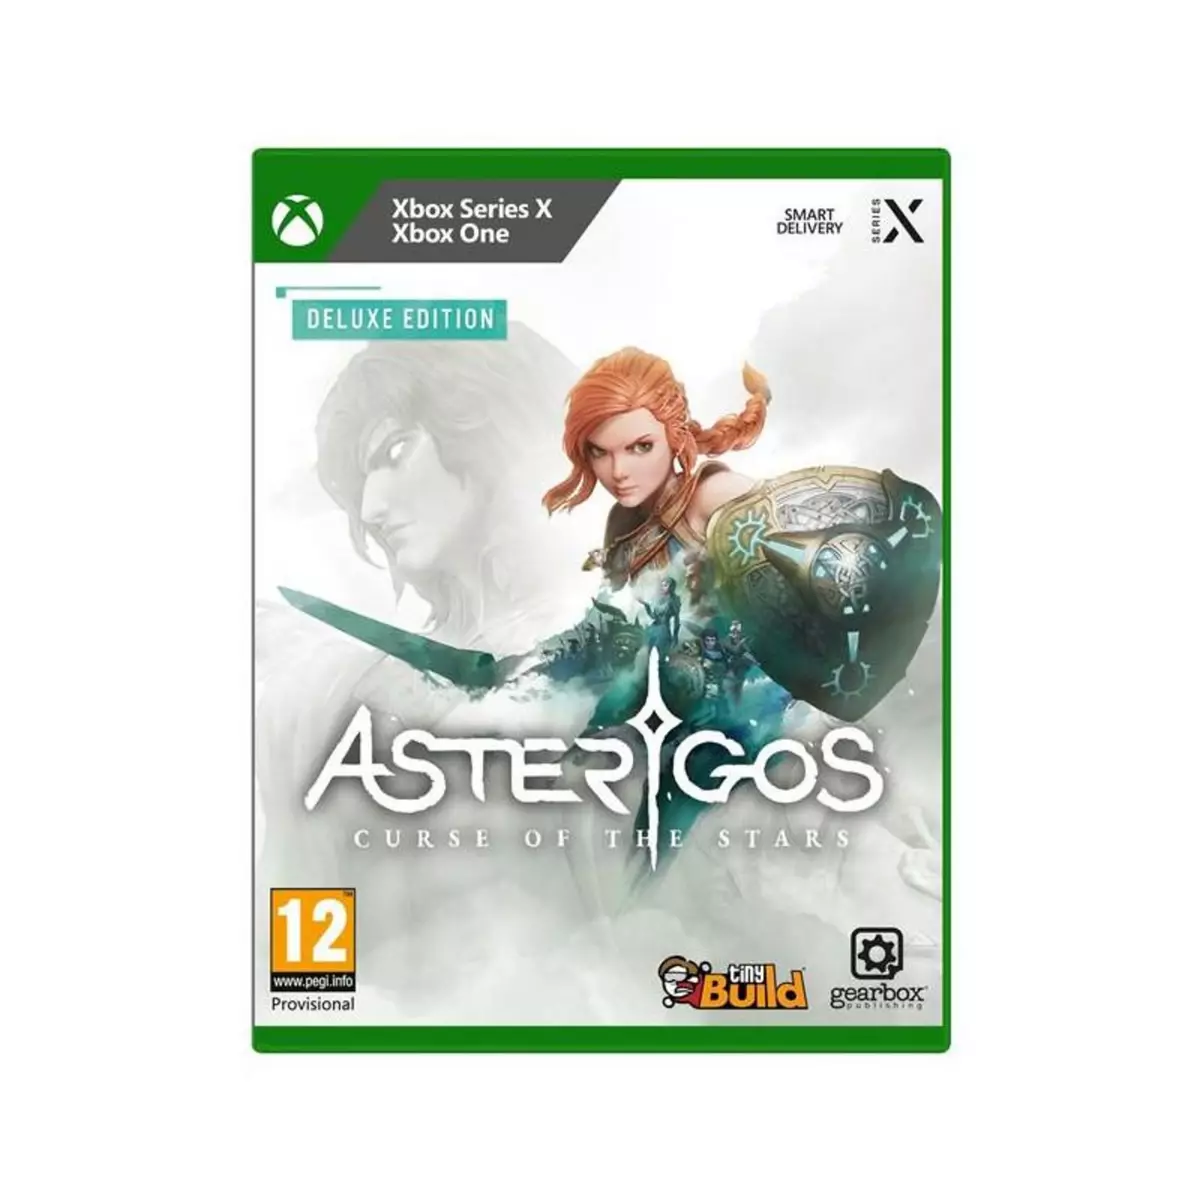 PREMIUM Asterigos  Curse of the Stars Deluxe Edition Xbox